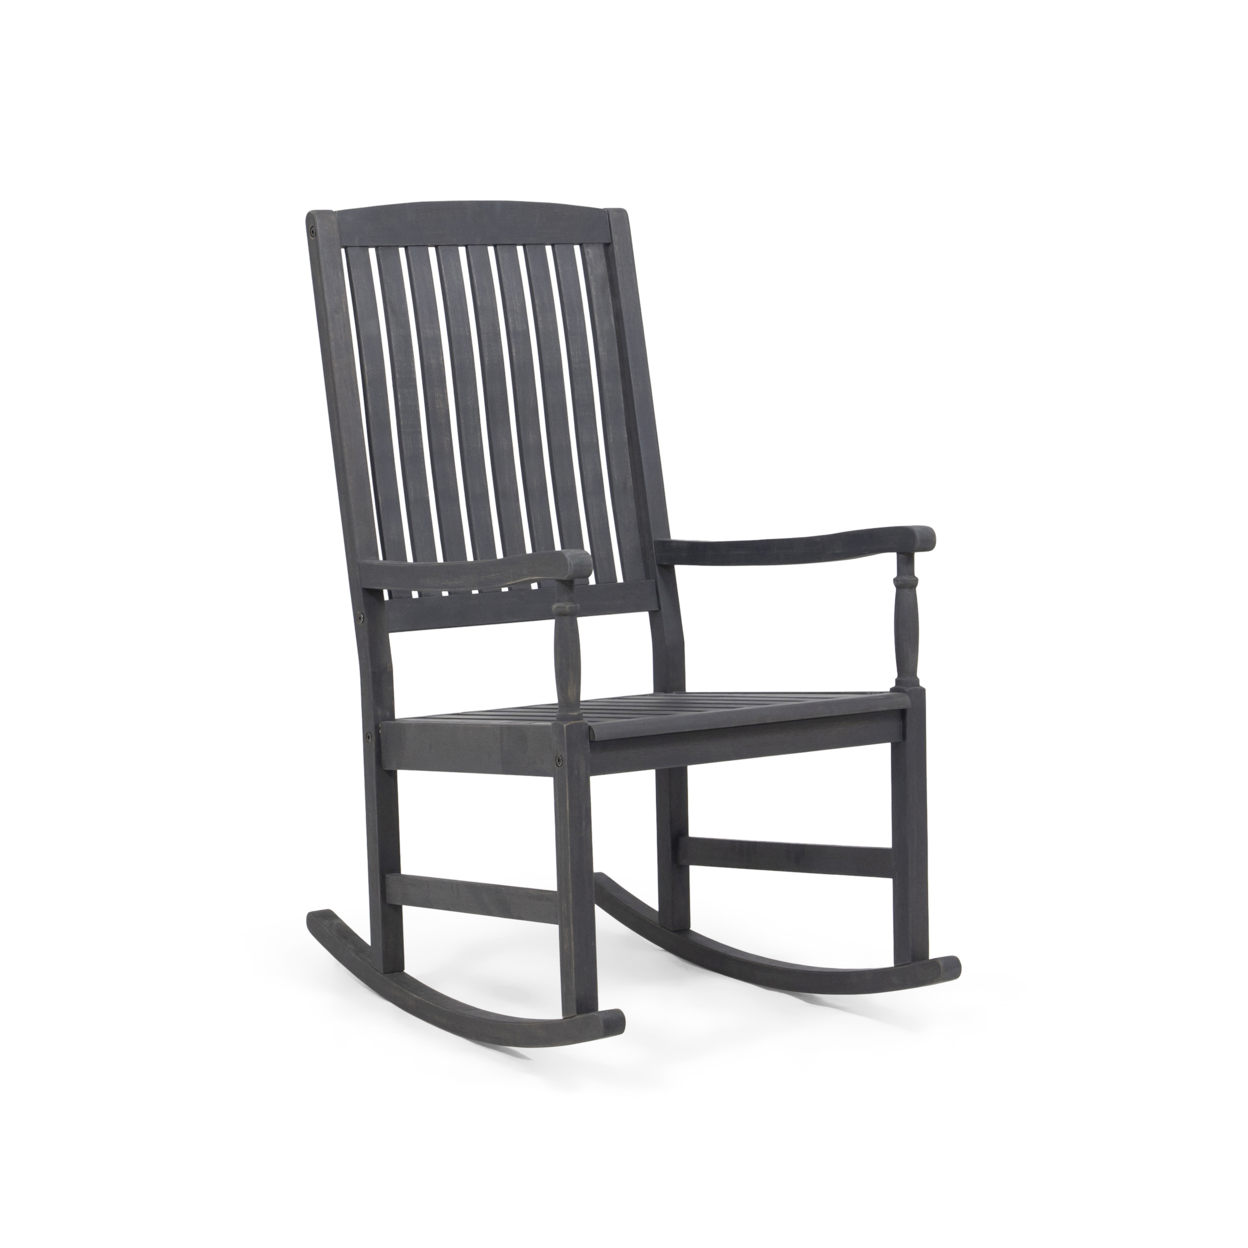 Myrna Outdoor Acacia Wood Rocking Chair - Gray Finish